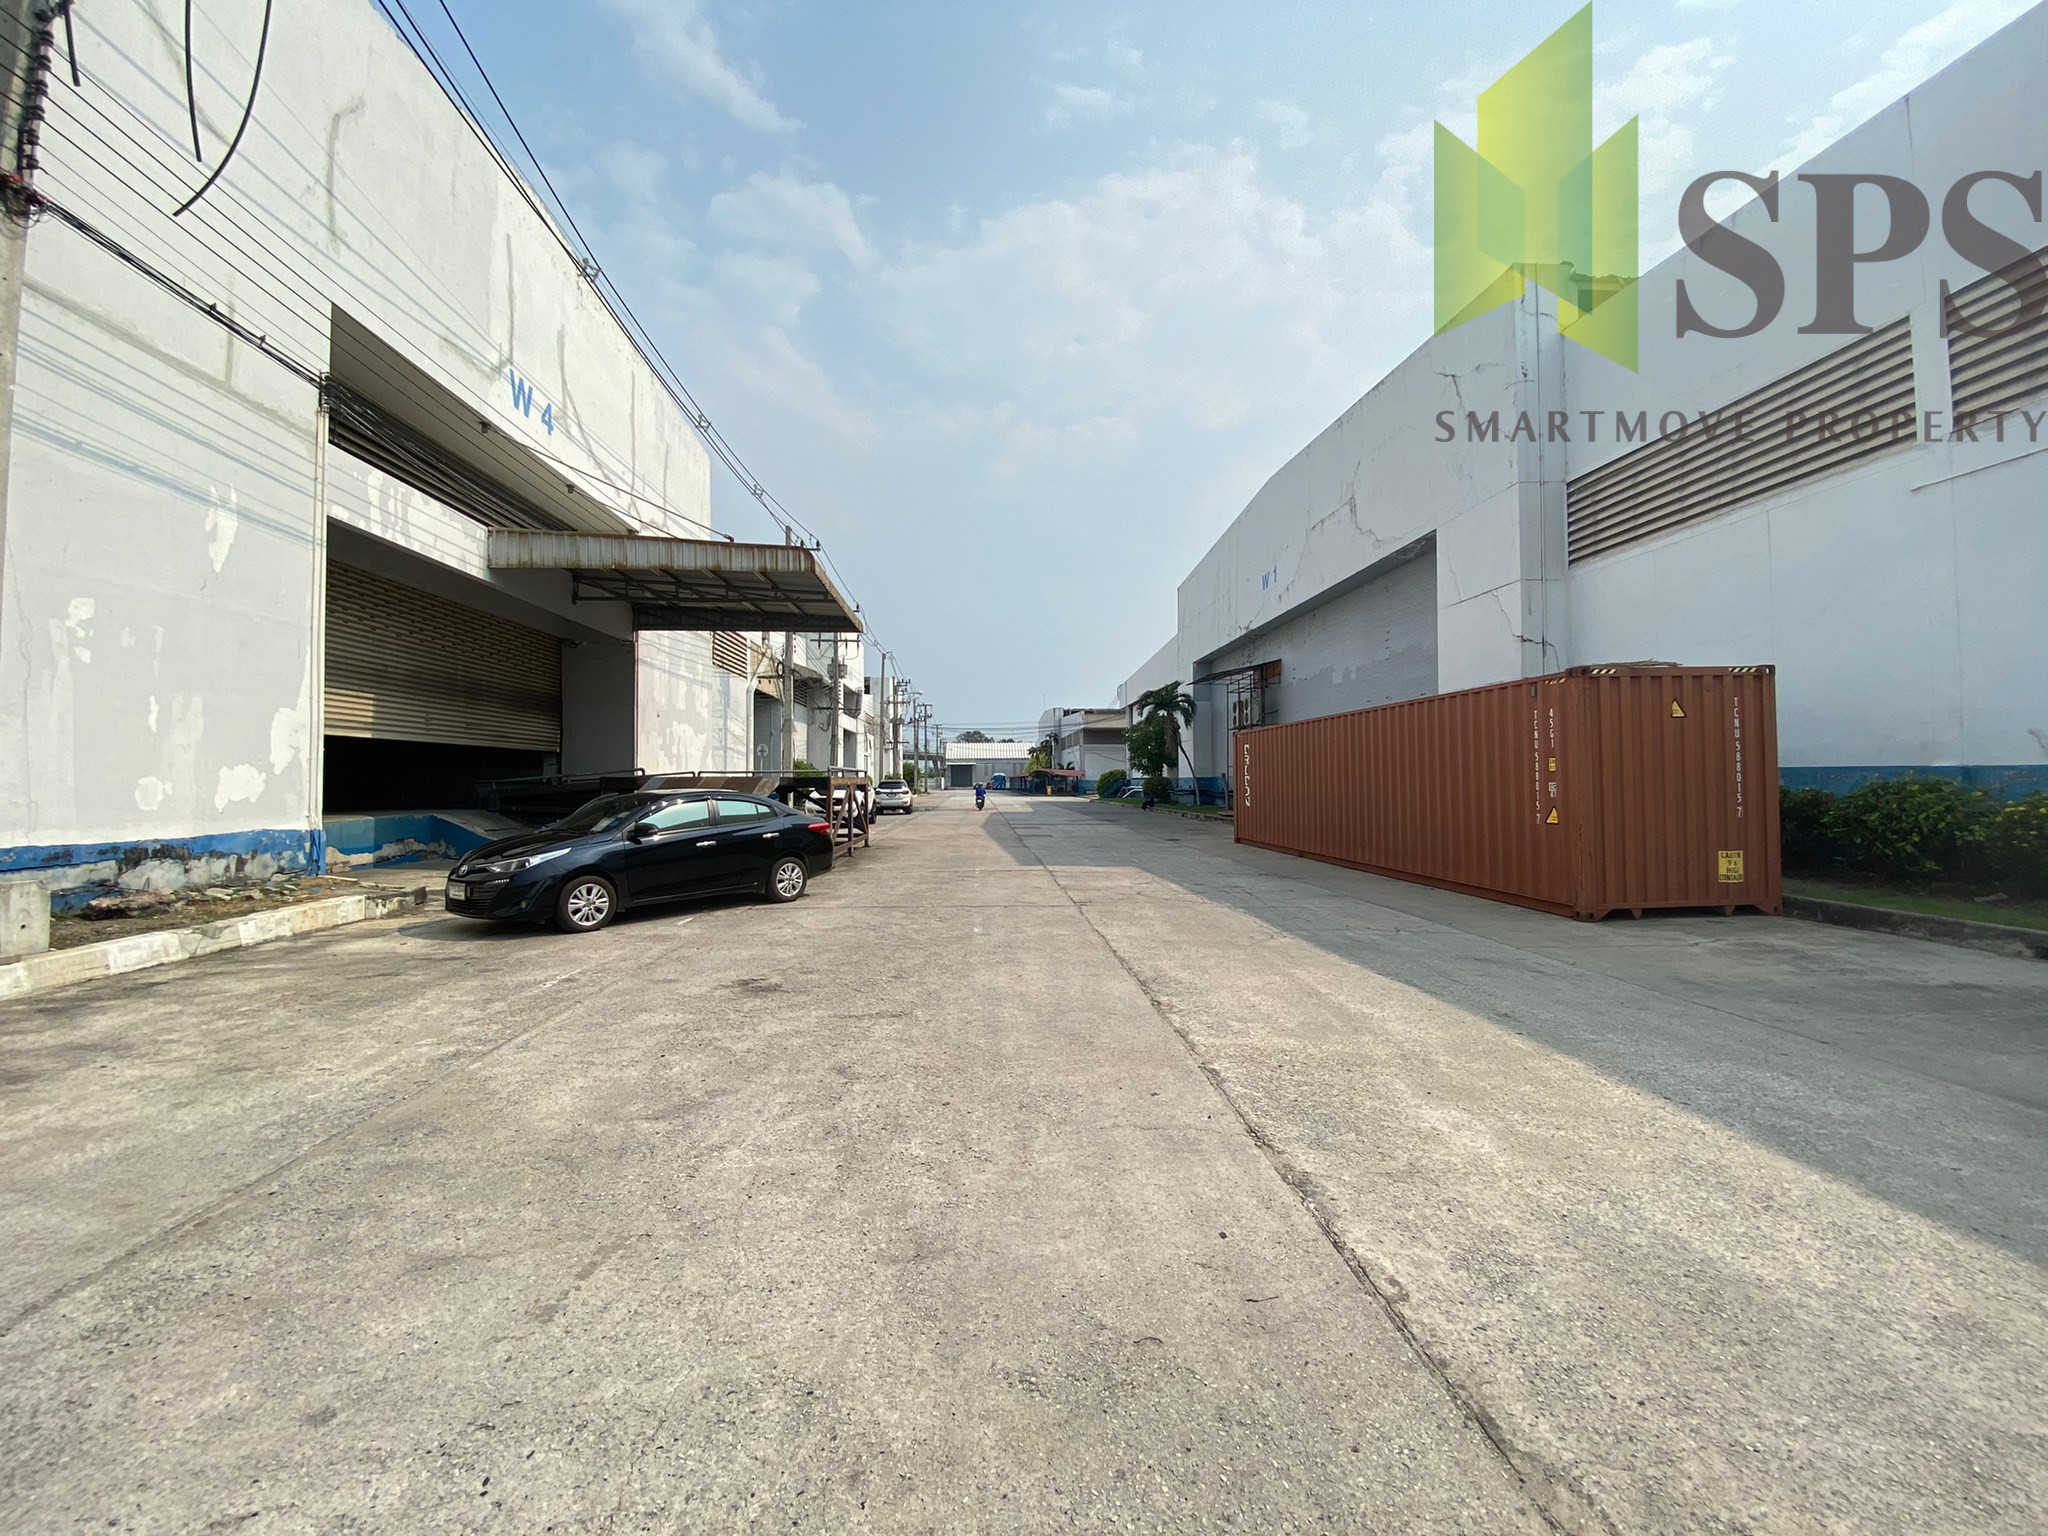 Factory, Warehouse in Free Zone for RENT at Bangna-Trad Road, Km 52 / โกดัง, โรงงาน ในเขตฟรีโซน สำหรับเช่า ที่ บางนาตราด กม.52(Property ID: SPS-PPW159)